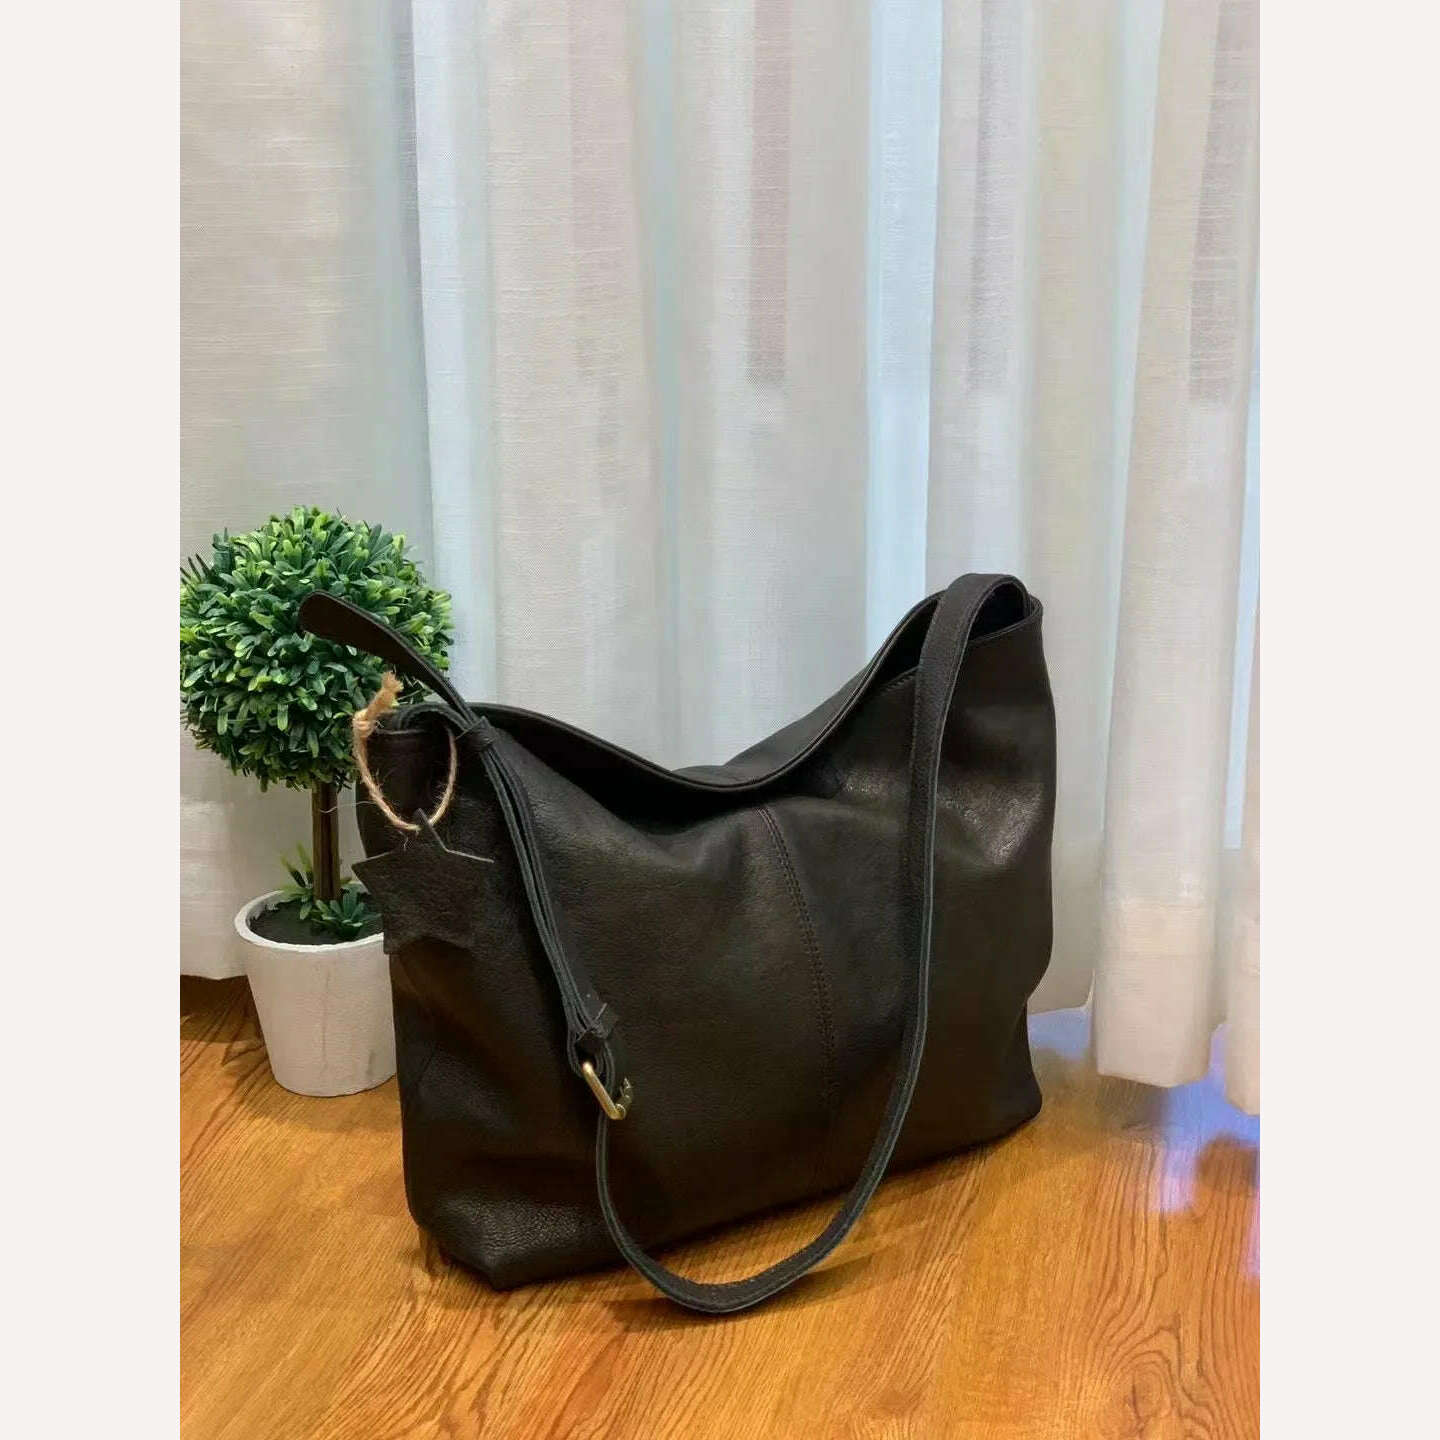 KIMLUD, ANGENGRUI Genuine Leather Handbag Luxury Cowhide Casual Tote  Natural Leather Bucket Shopper Daily Bag Big Purse Shoulder Bag, black / L / CHINA, KIMLUD Women's Clothes